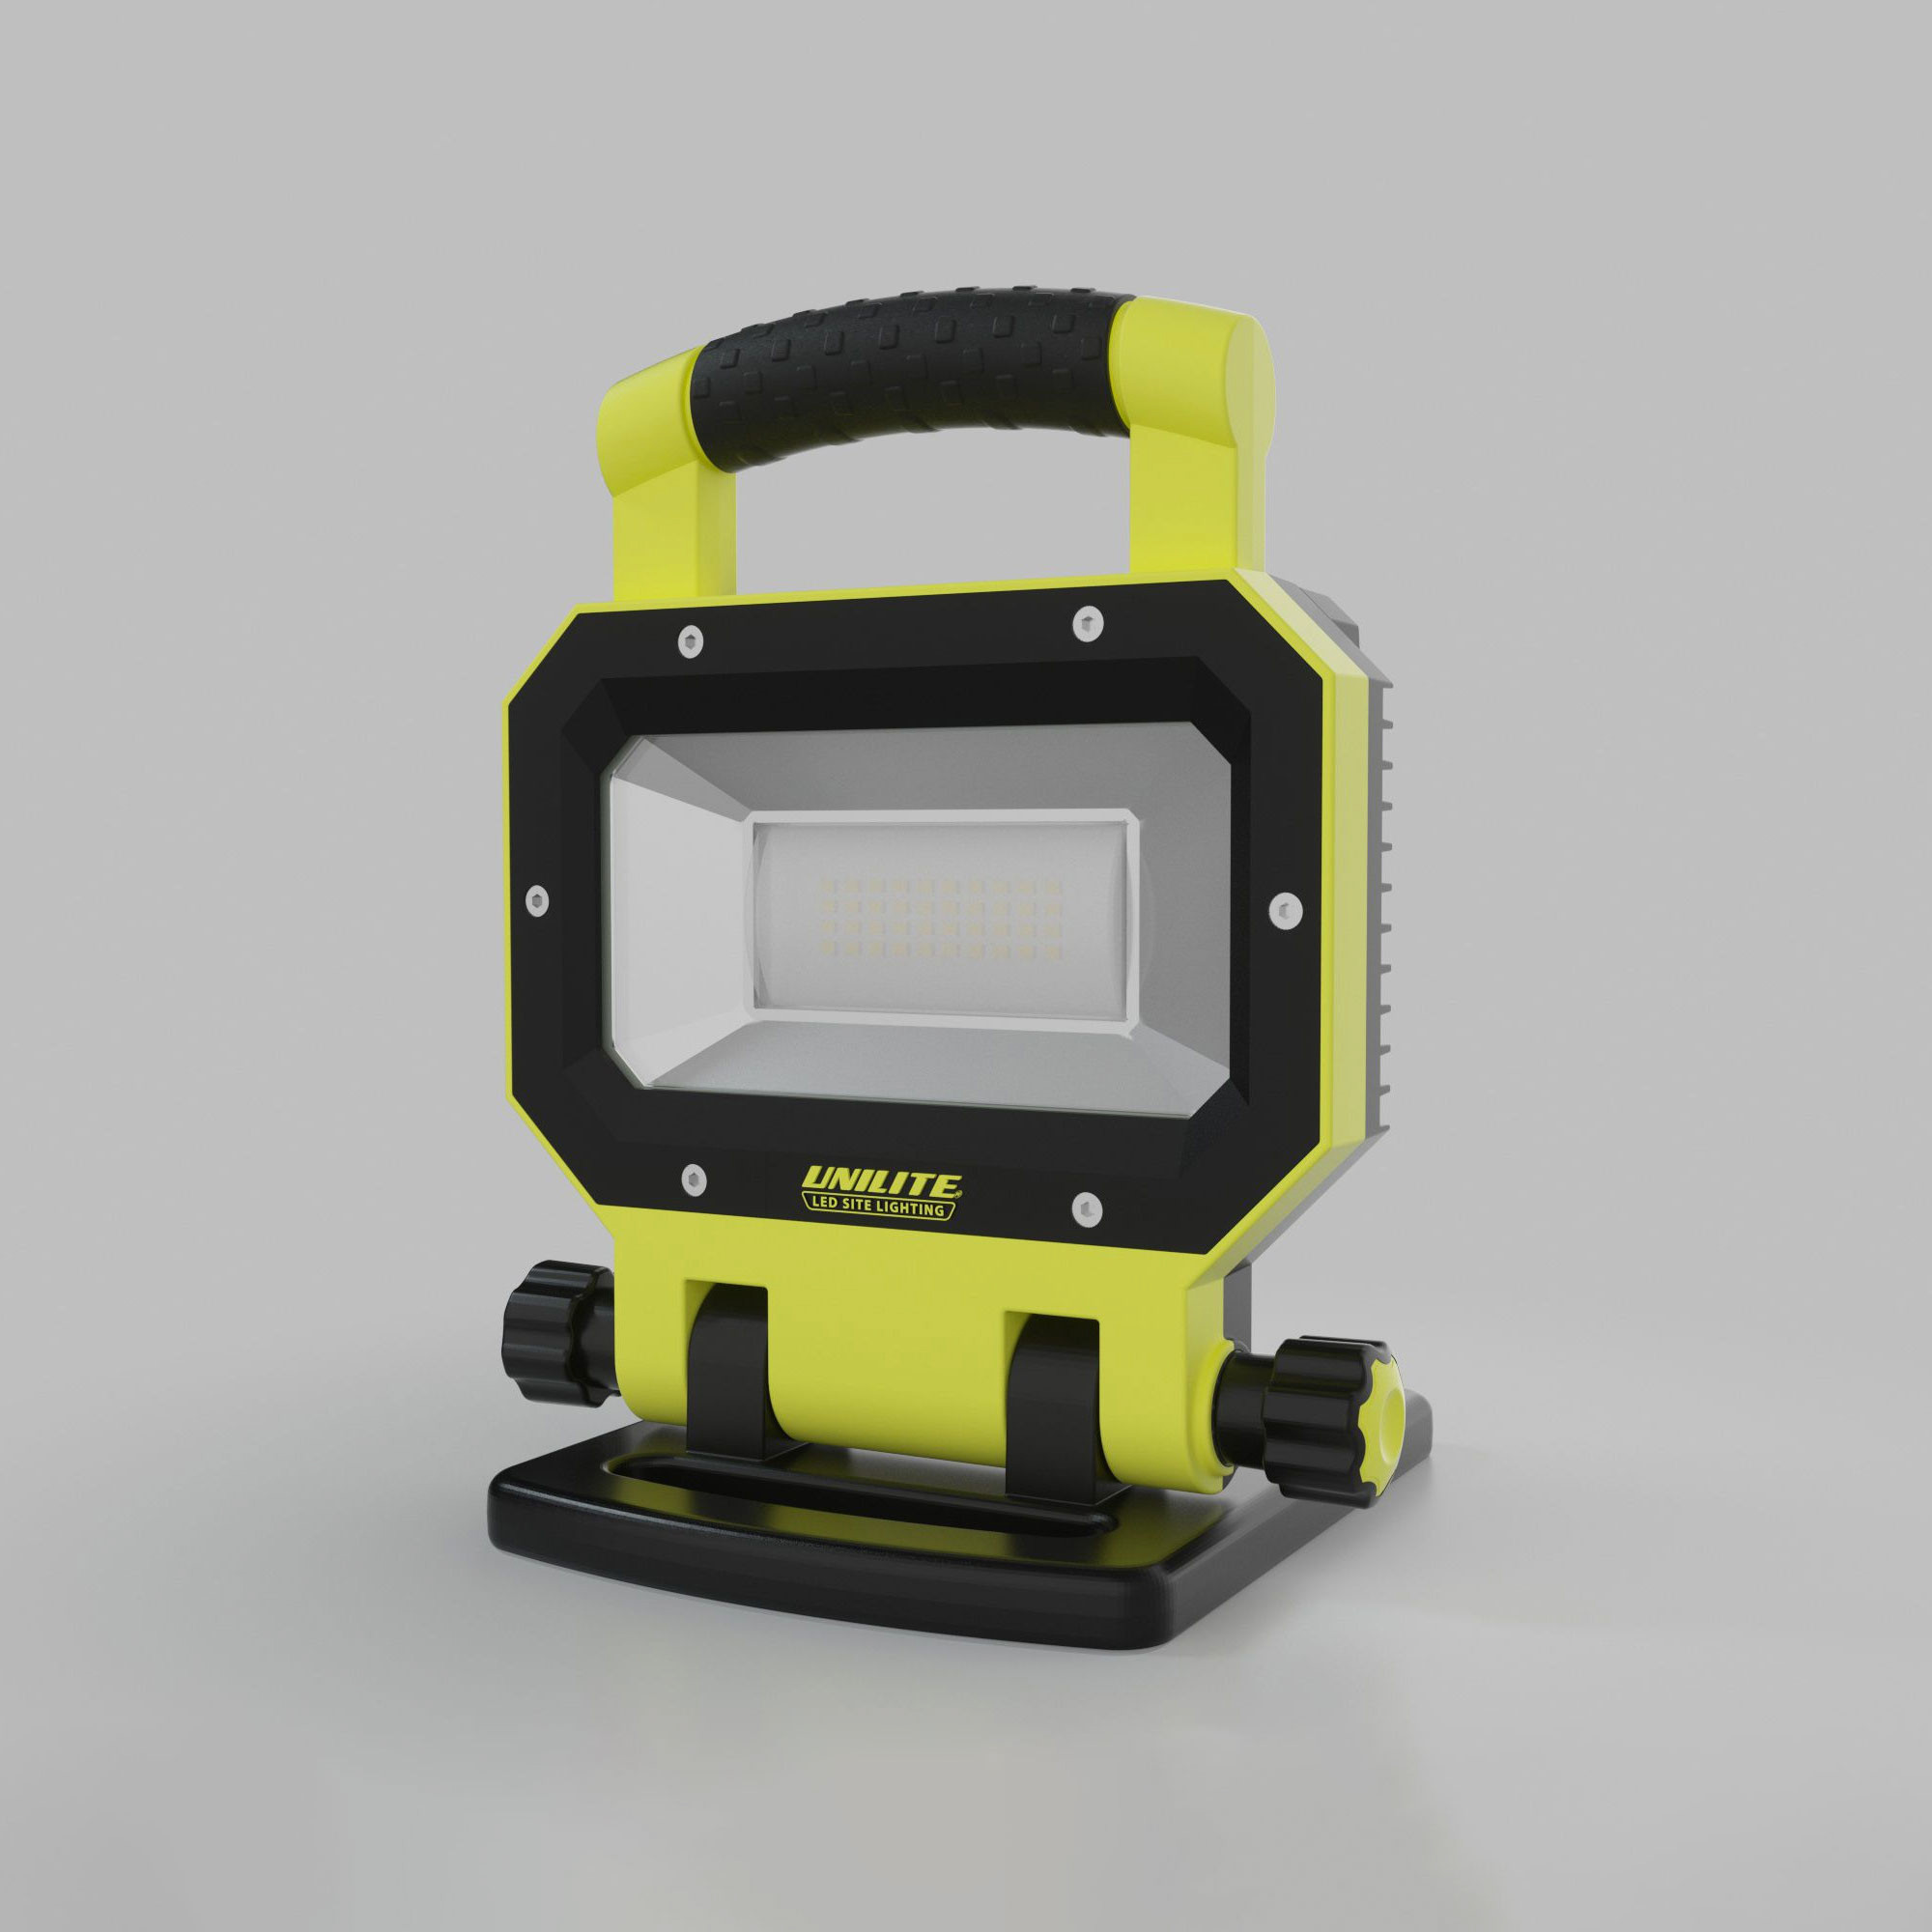 Unilite SLR-3000 LED Worklight with PowerBank